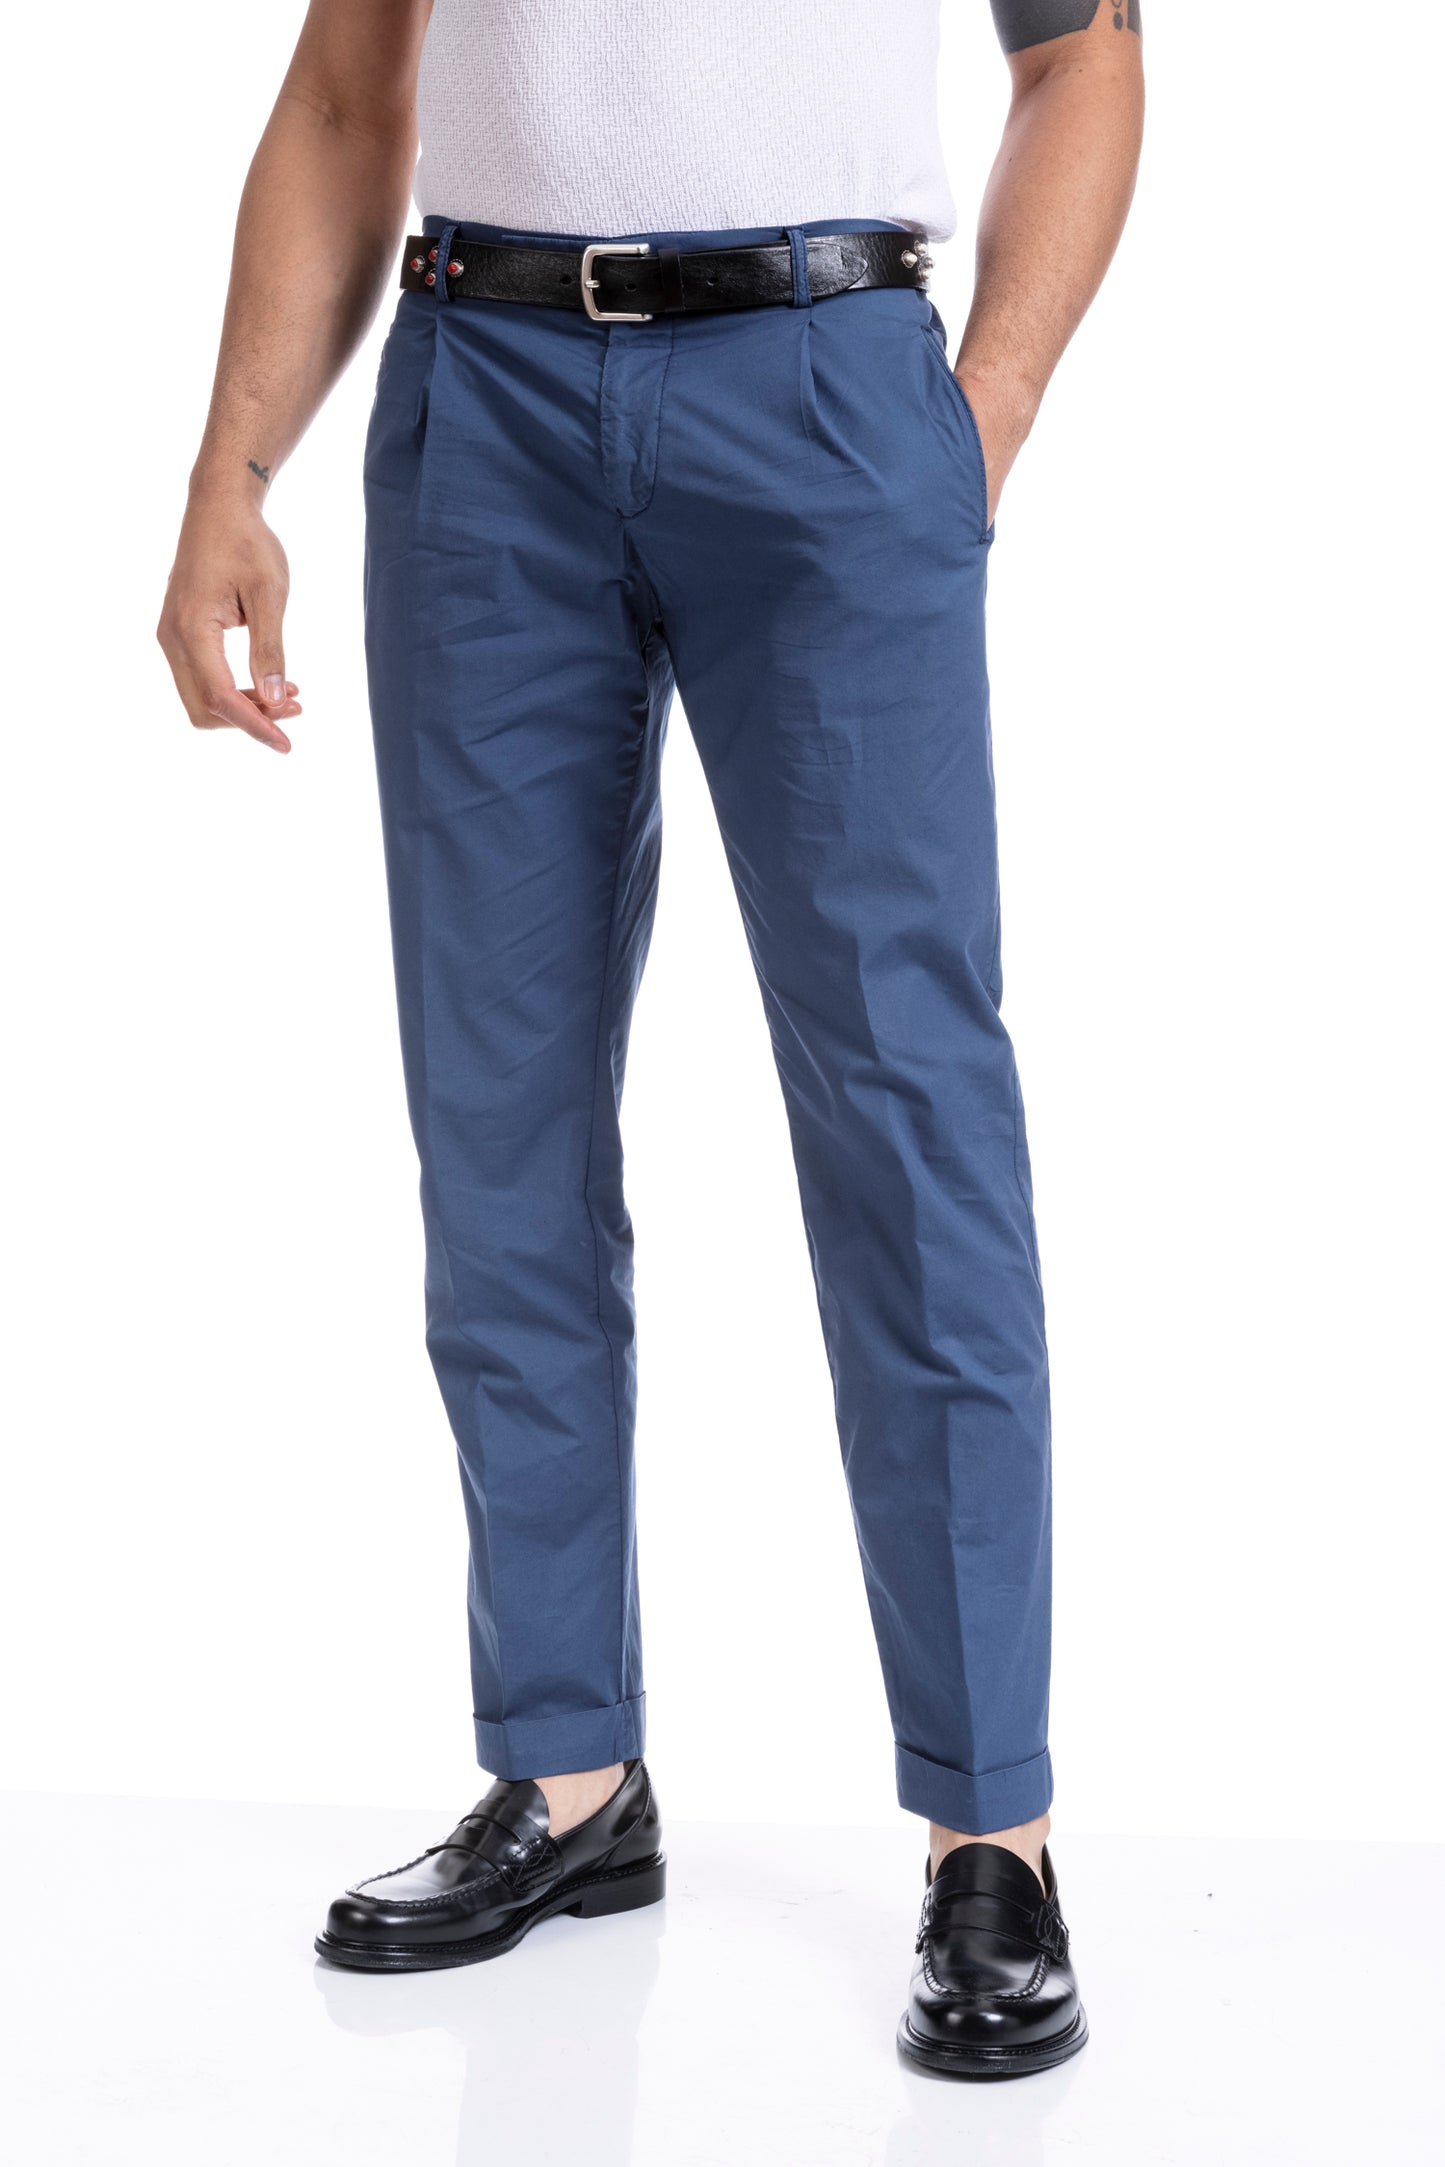 Berwich Retro elax pantalone blu